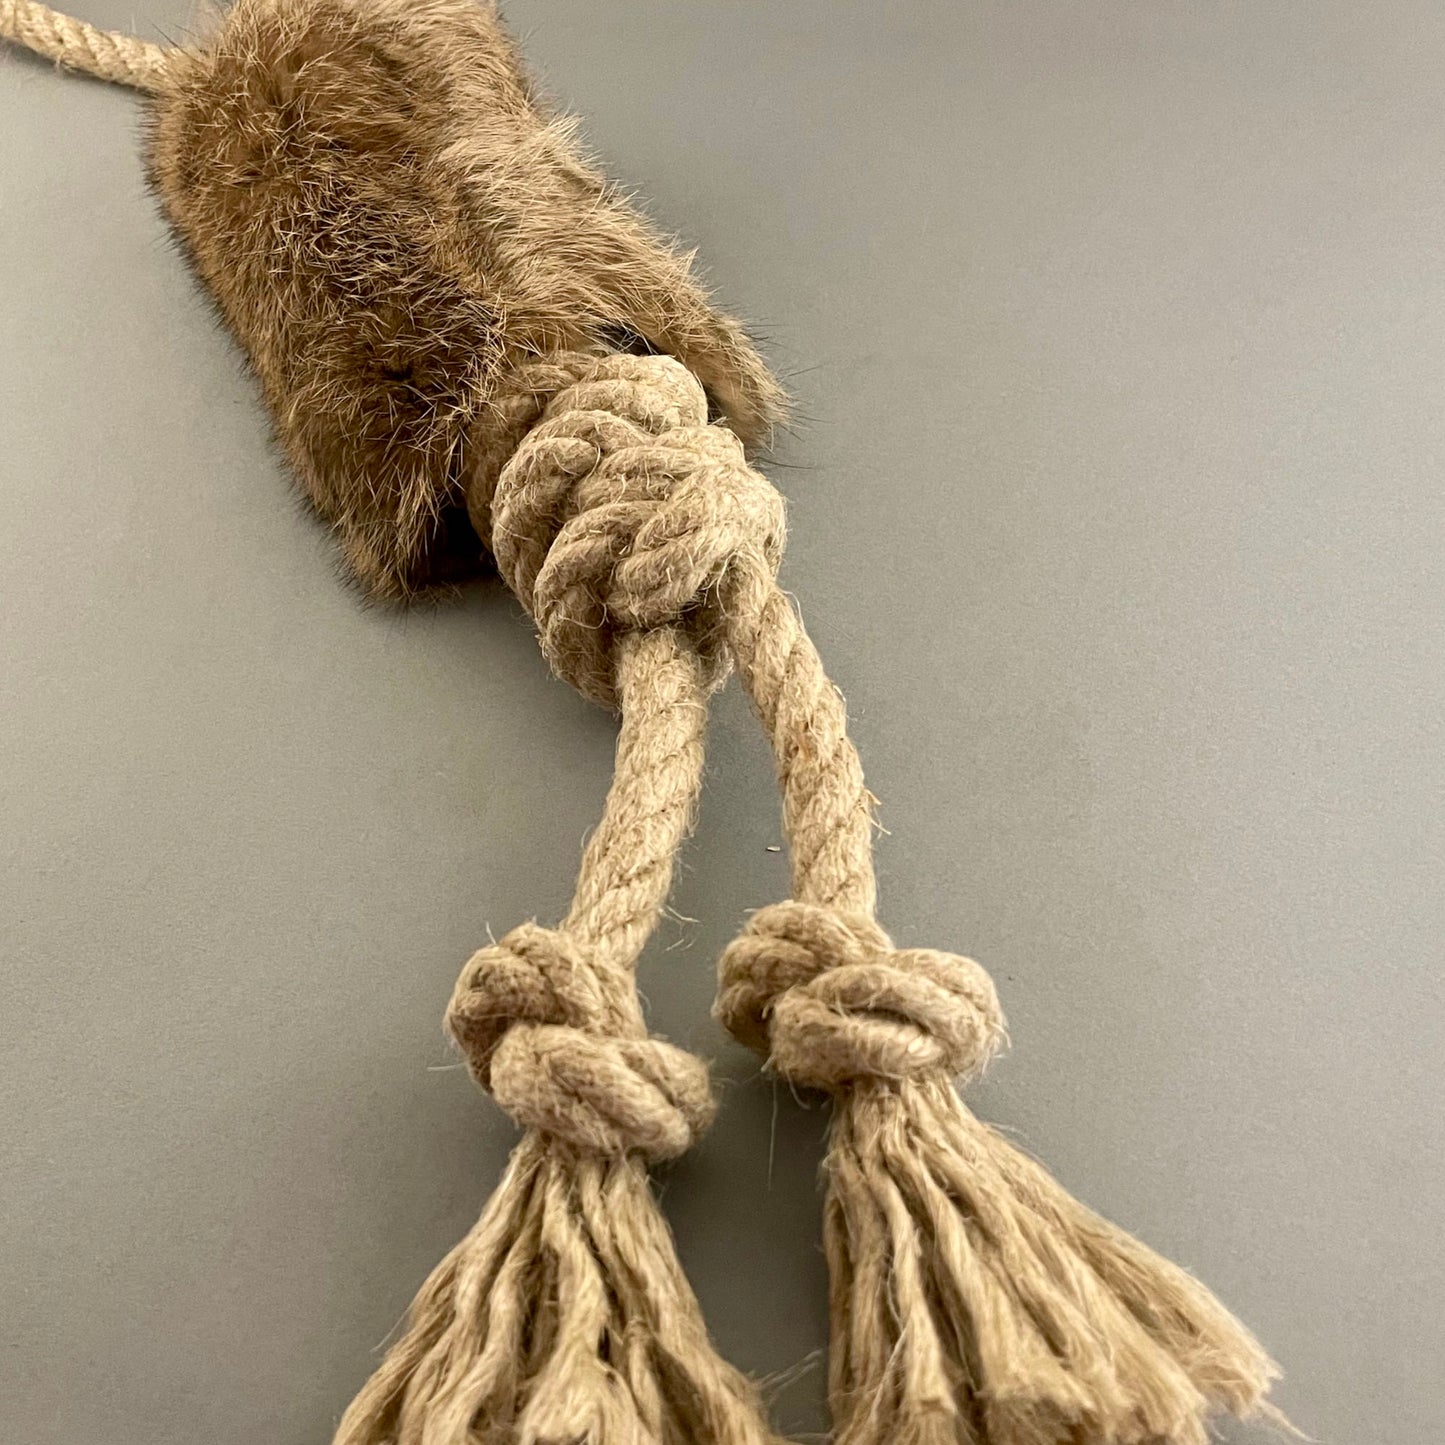 Hemp Rope and Rabbit Fur Dog Toy